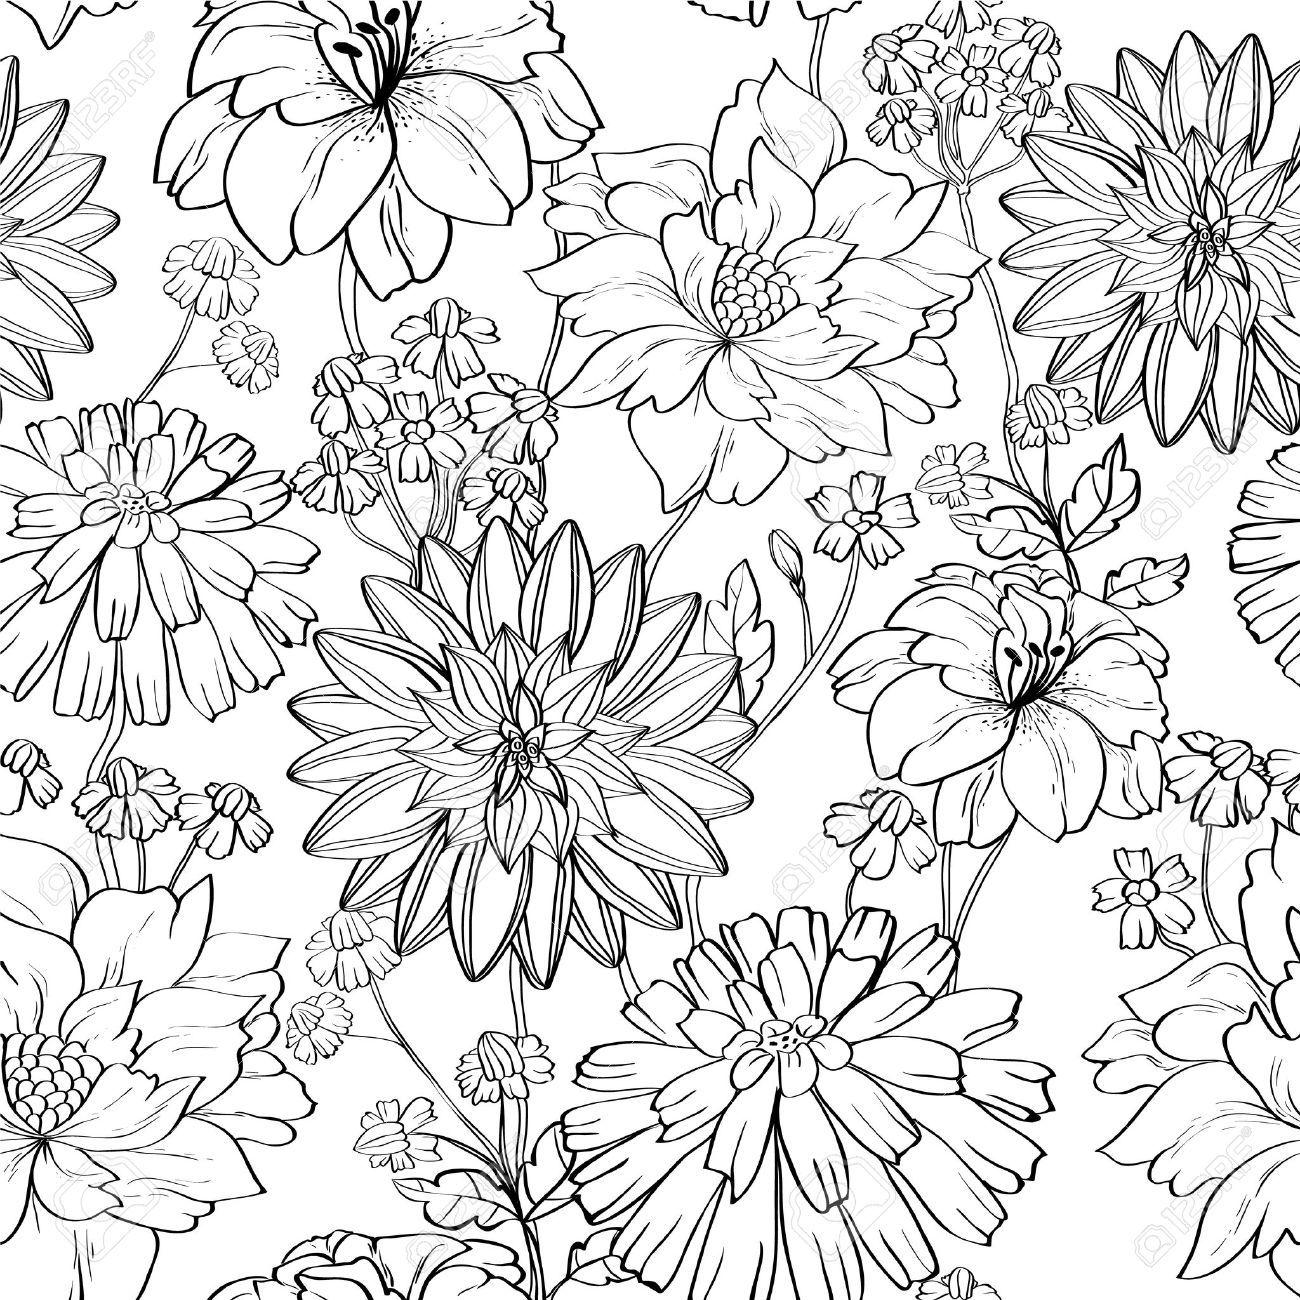 Flower Drawing Wallpaper. Explore